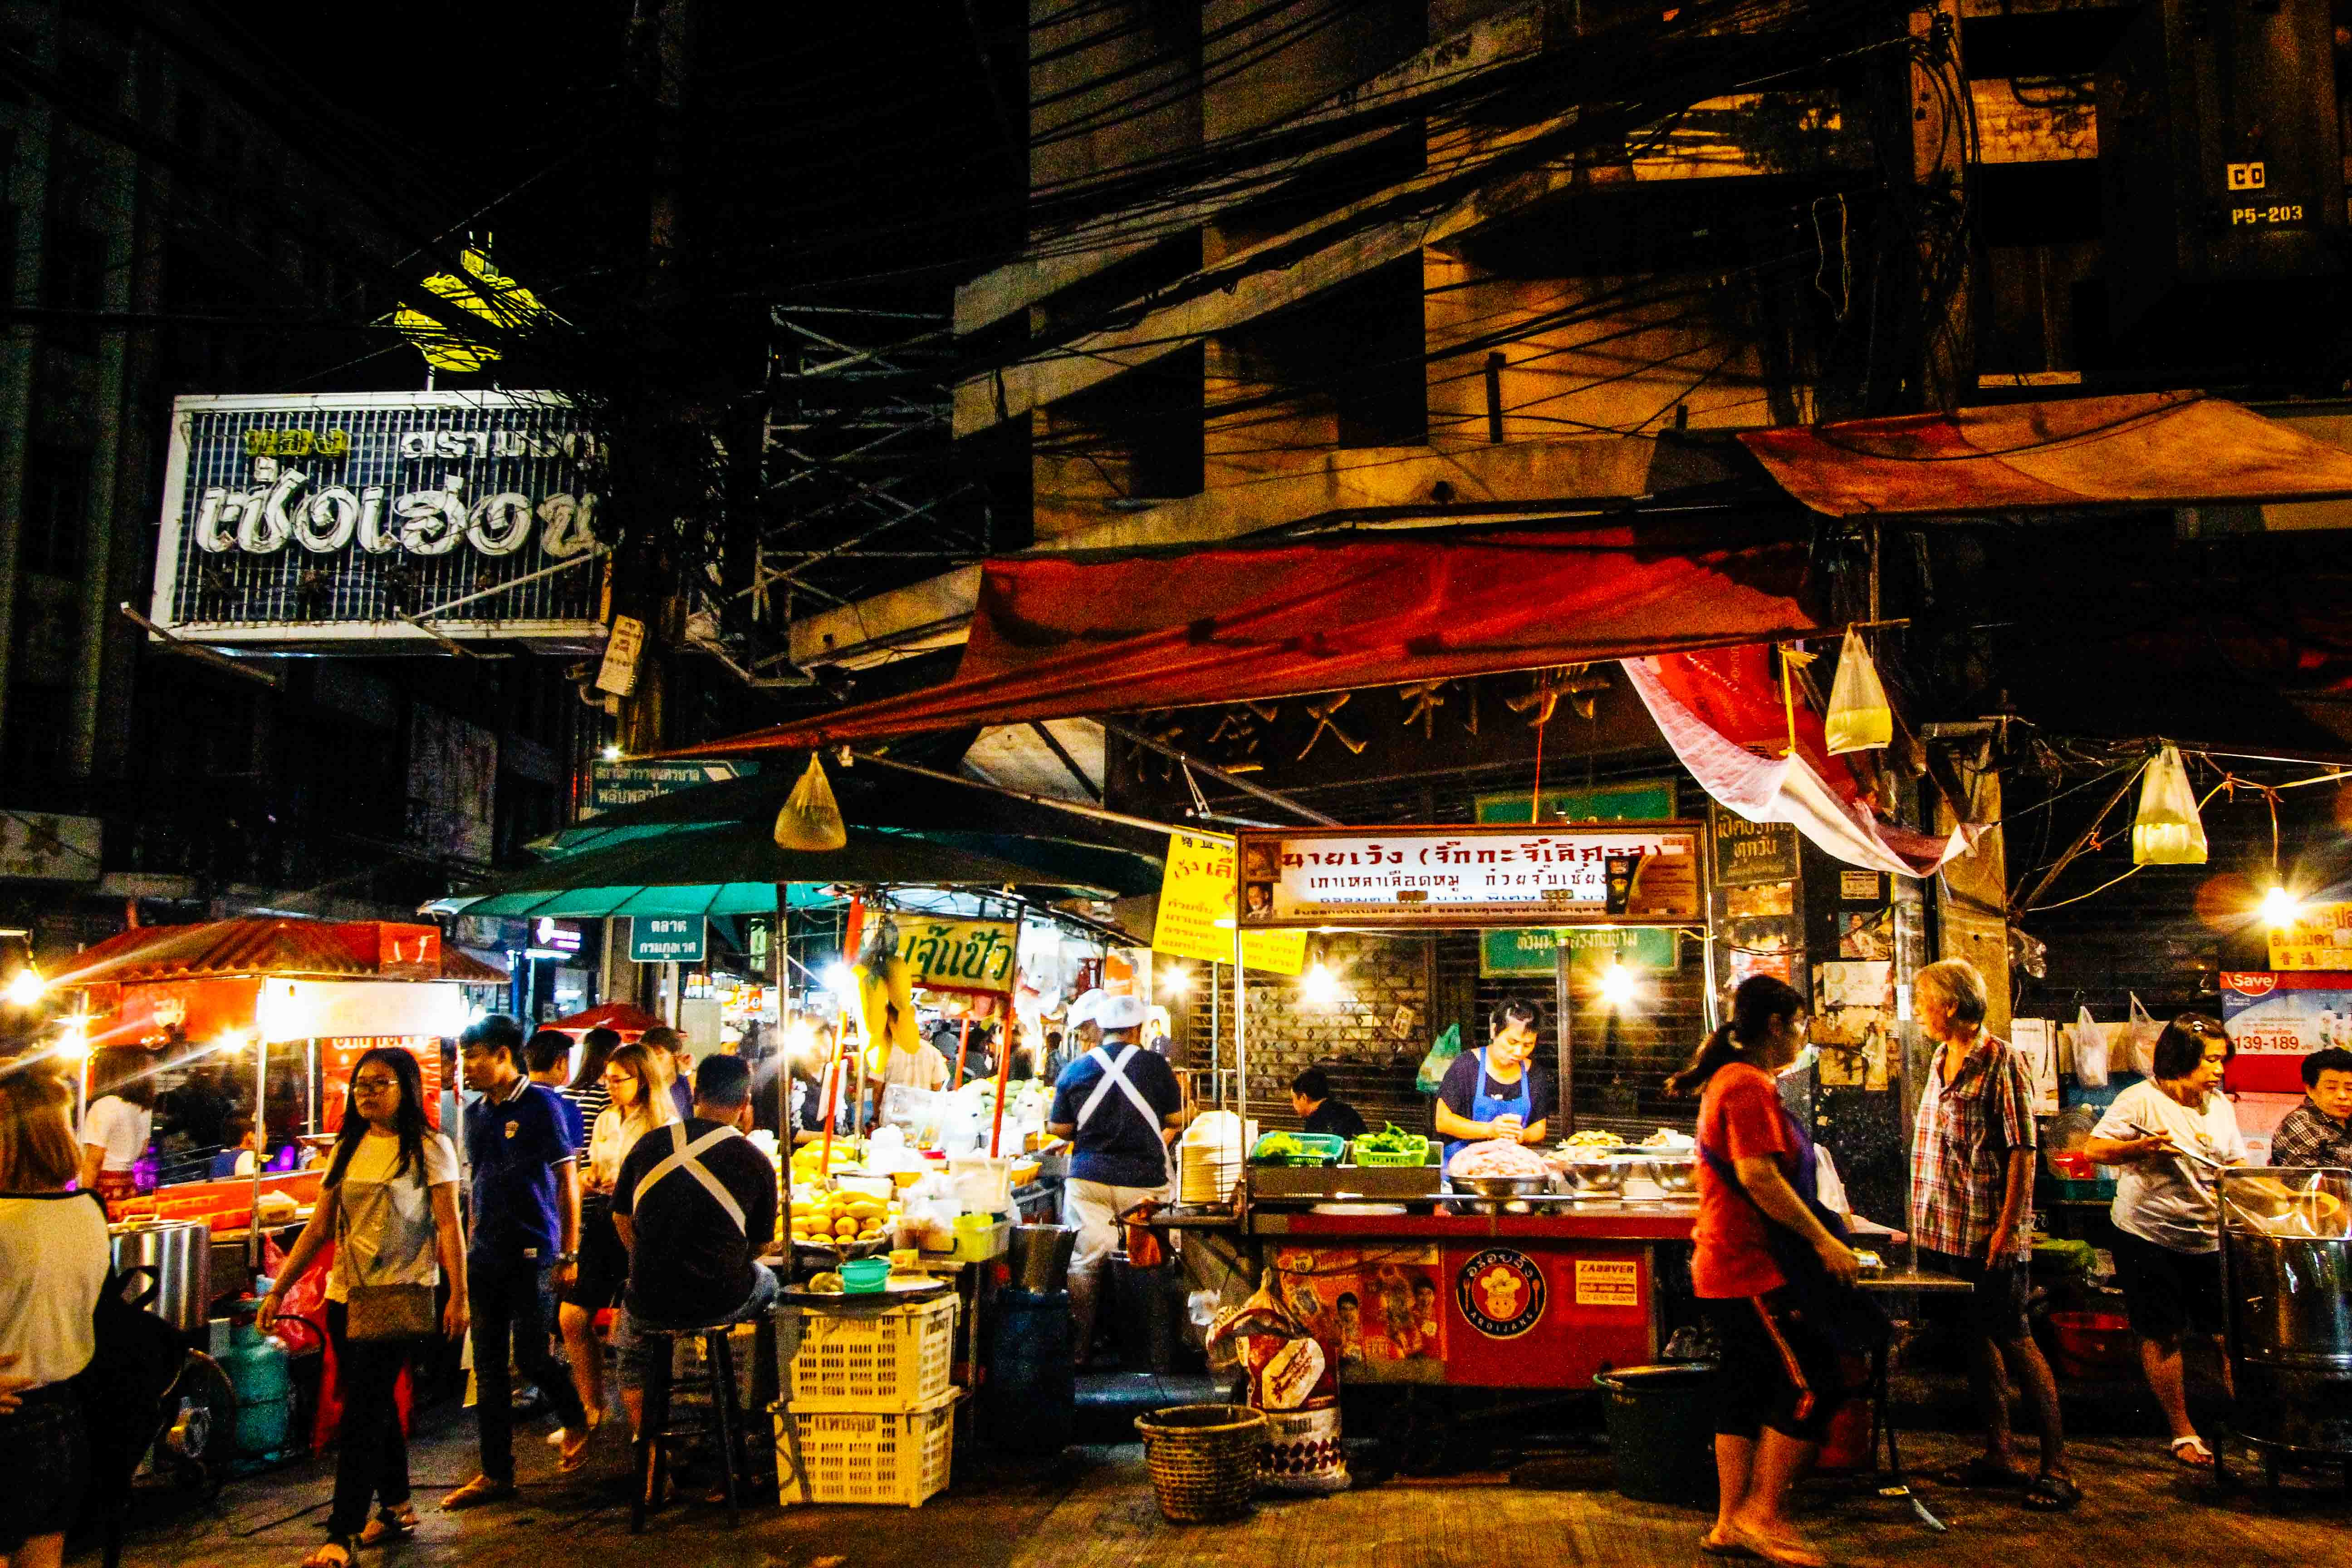 Китайский квартал Бангкок. Японский квартал в Бангкоке. Португальский квартал Бангкок. Китайский квартал ночной рынок стоки.